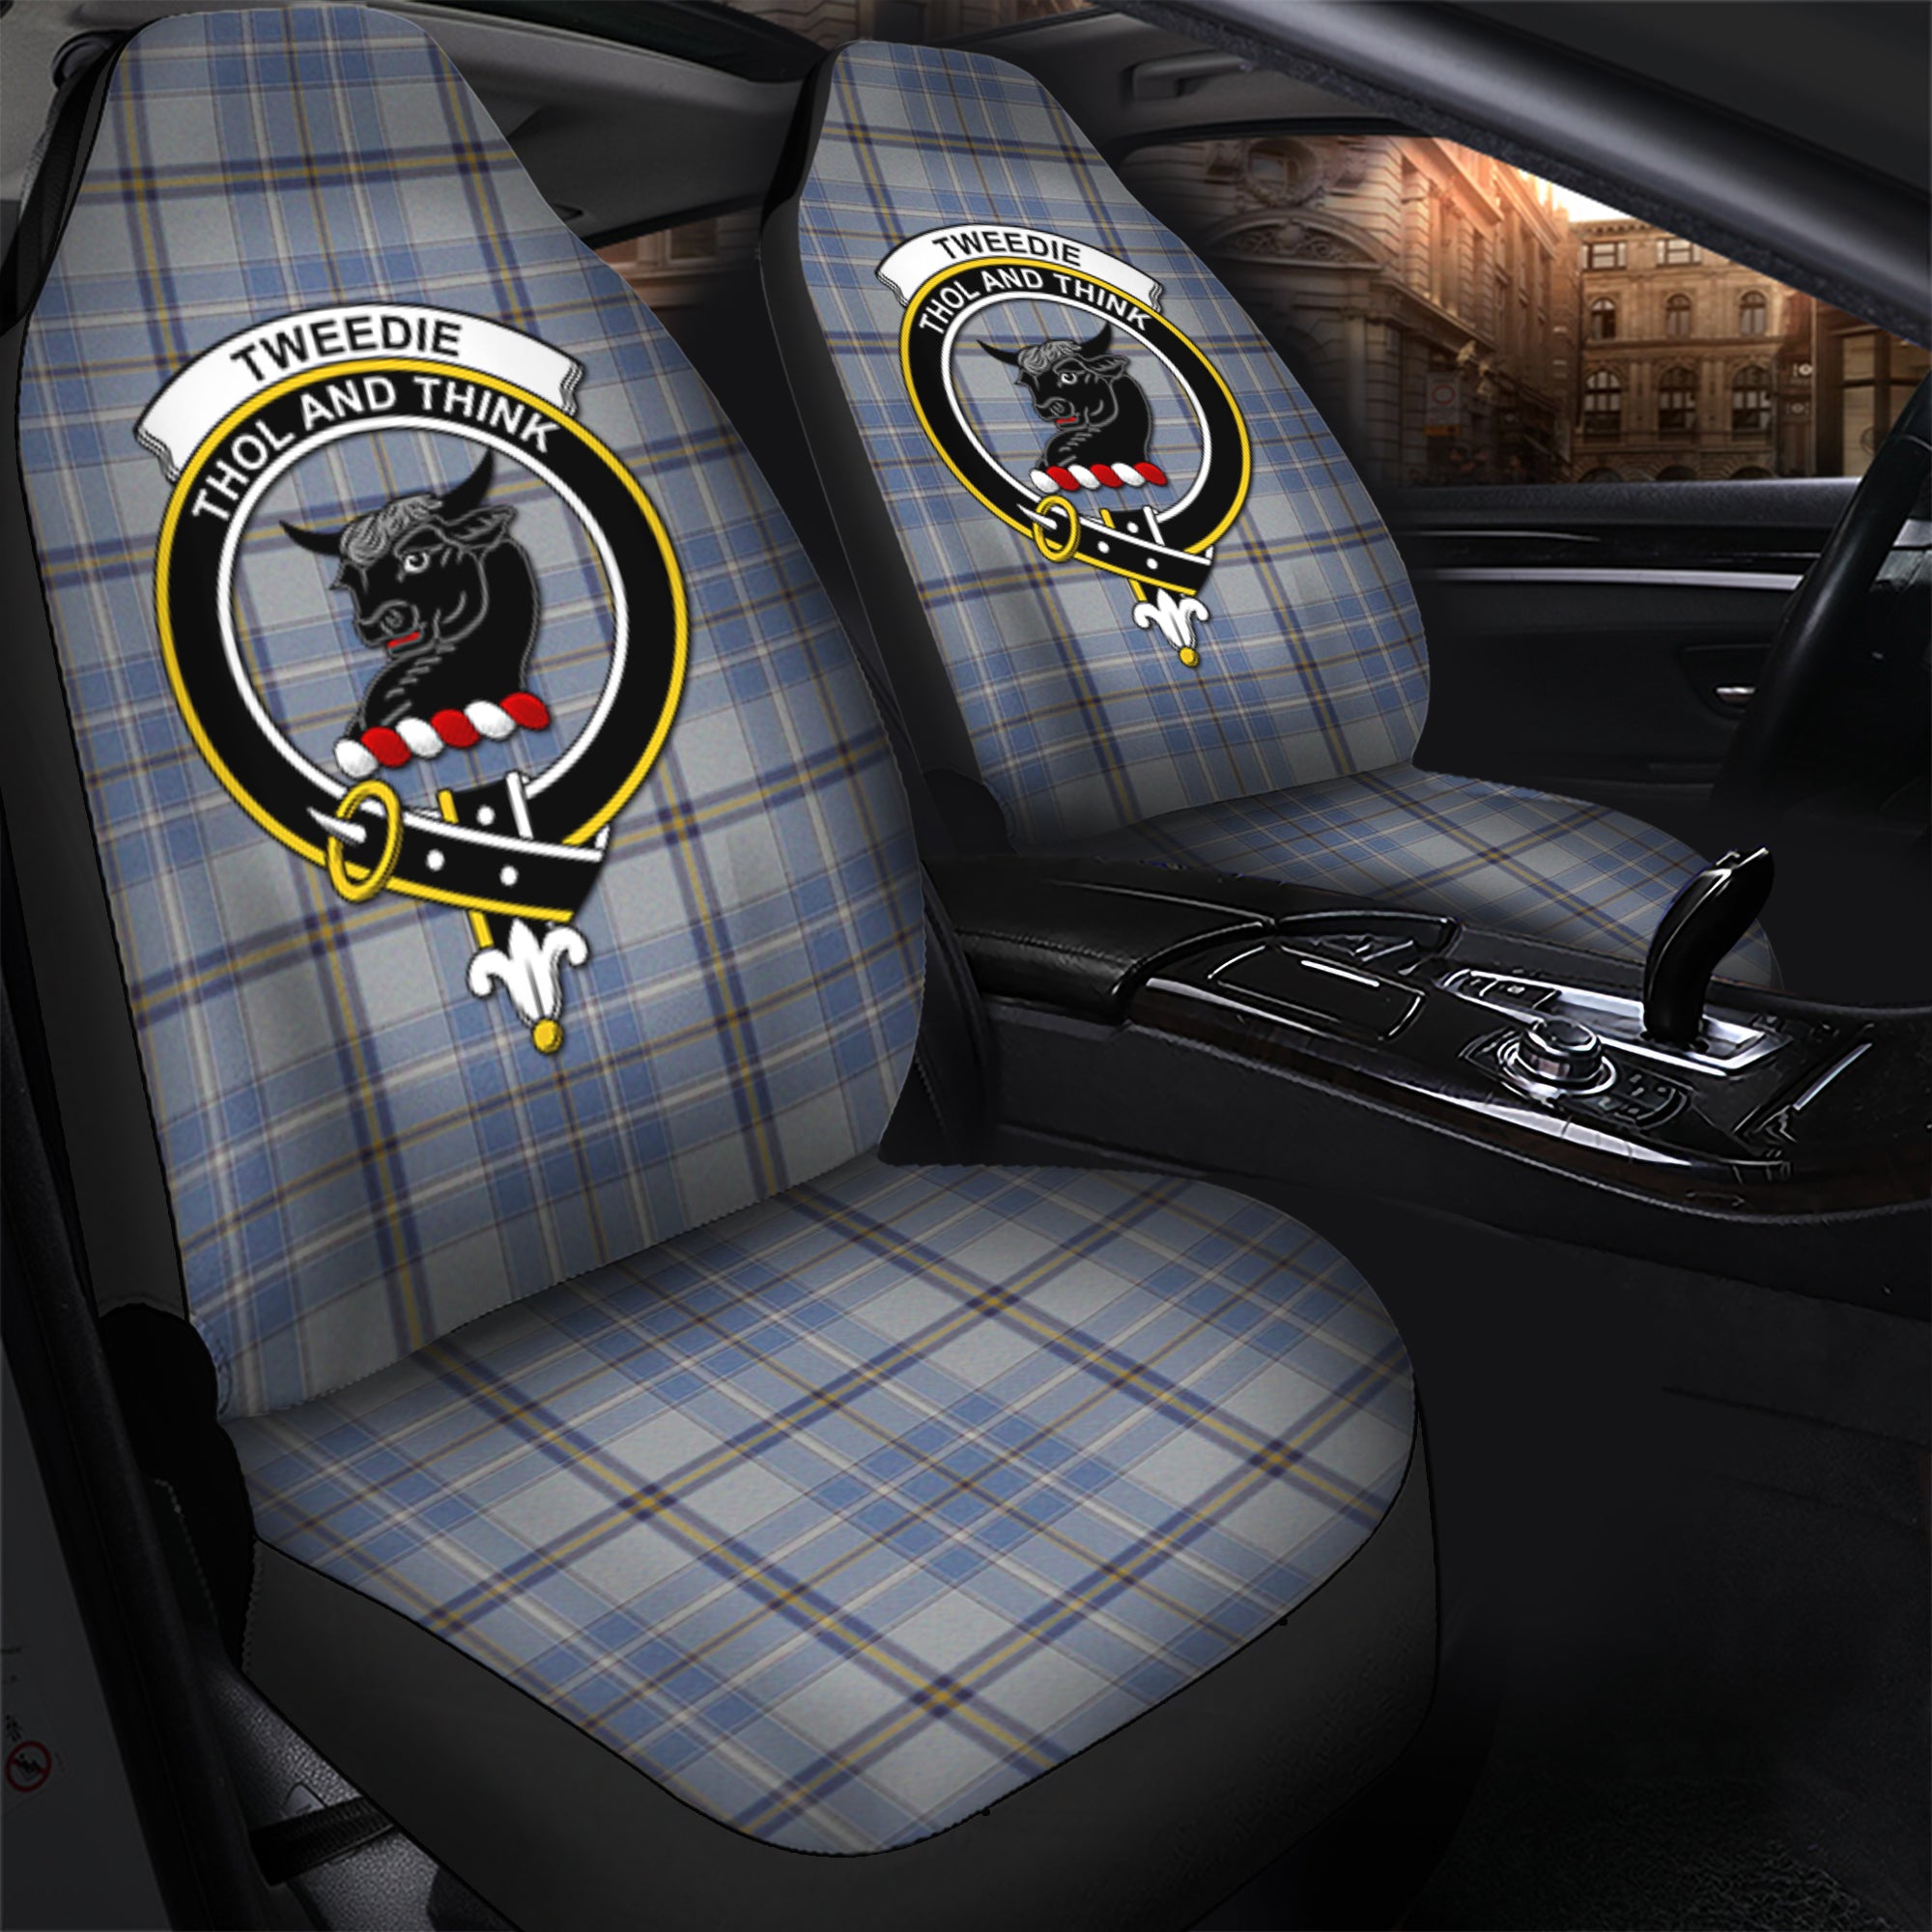 Tweedie Clan Tartan Car Seat Cover, Family Crest Tartan Seat Cover TS23